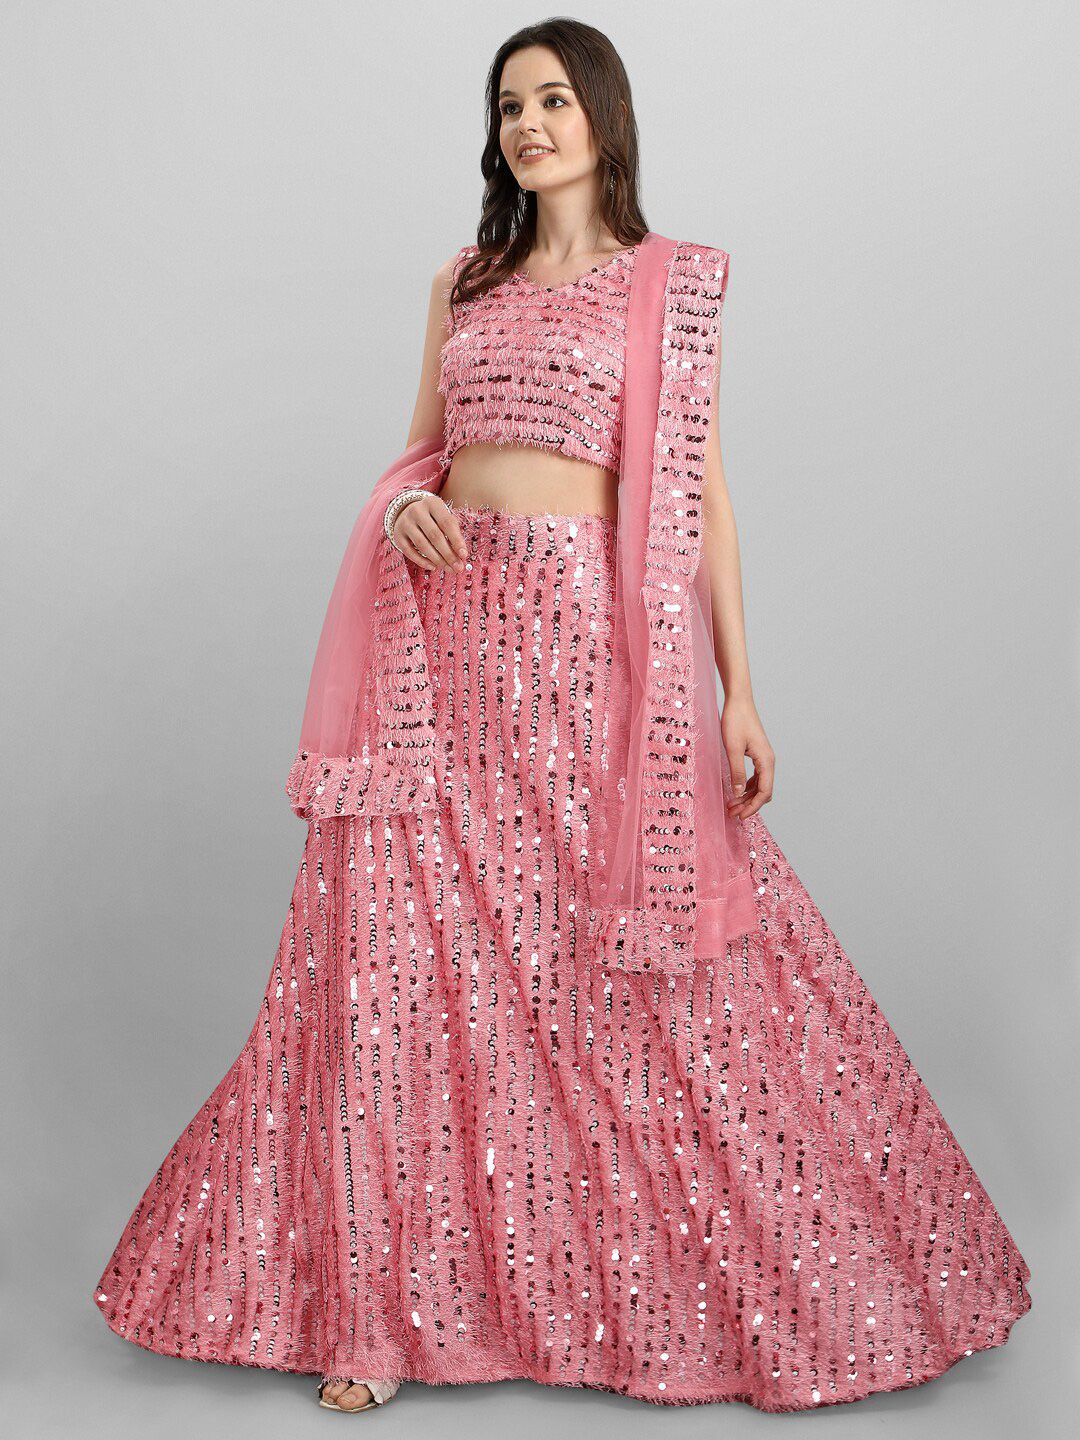 JATRIQQ Pink Embellished Semi-Stitched Lehenga & Unstitched Blouse With Dupatta Price in India